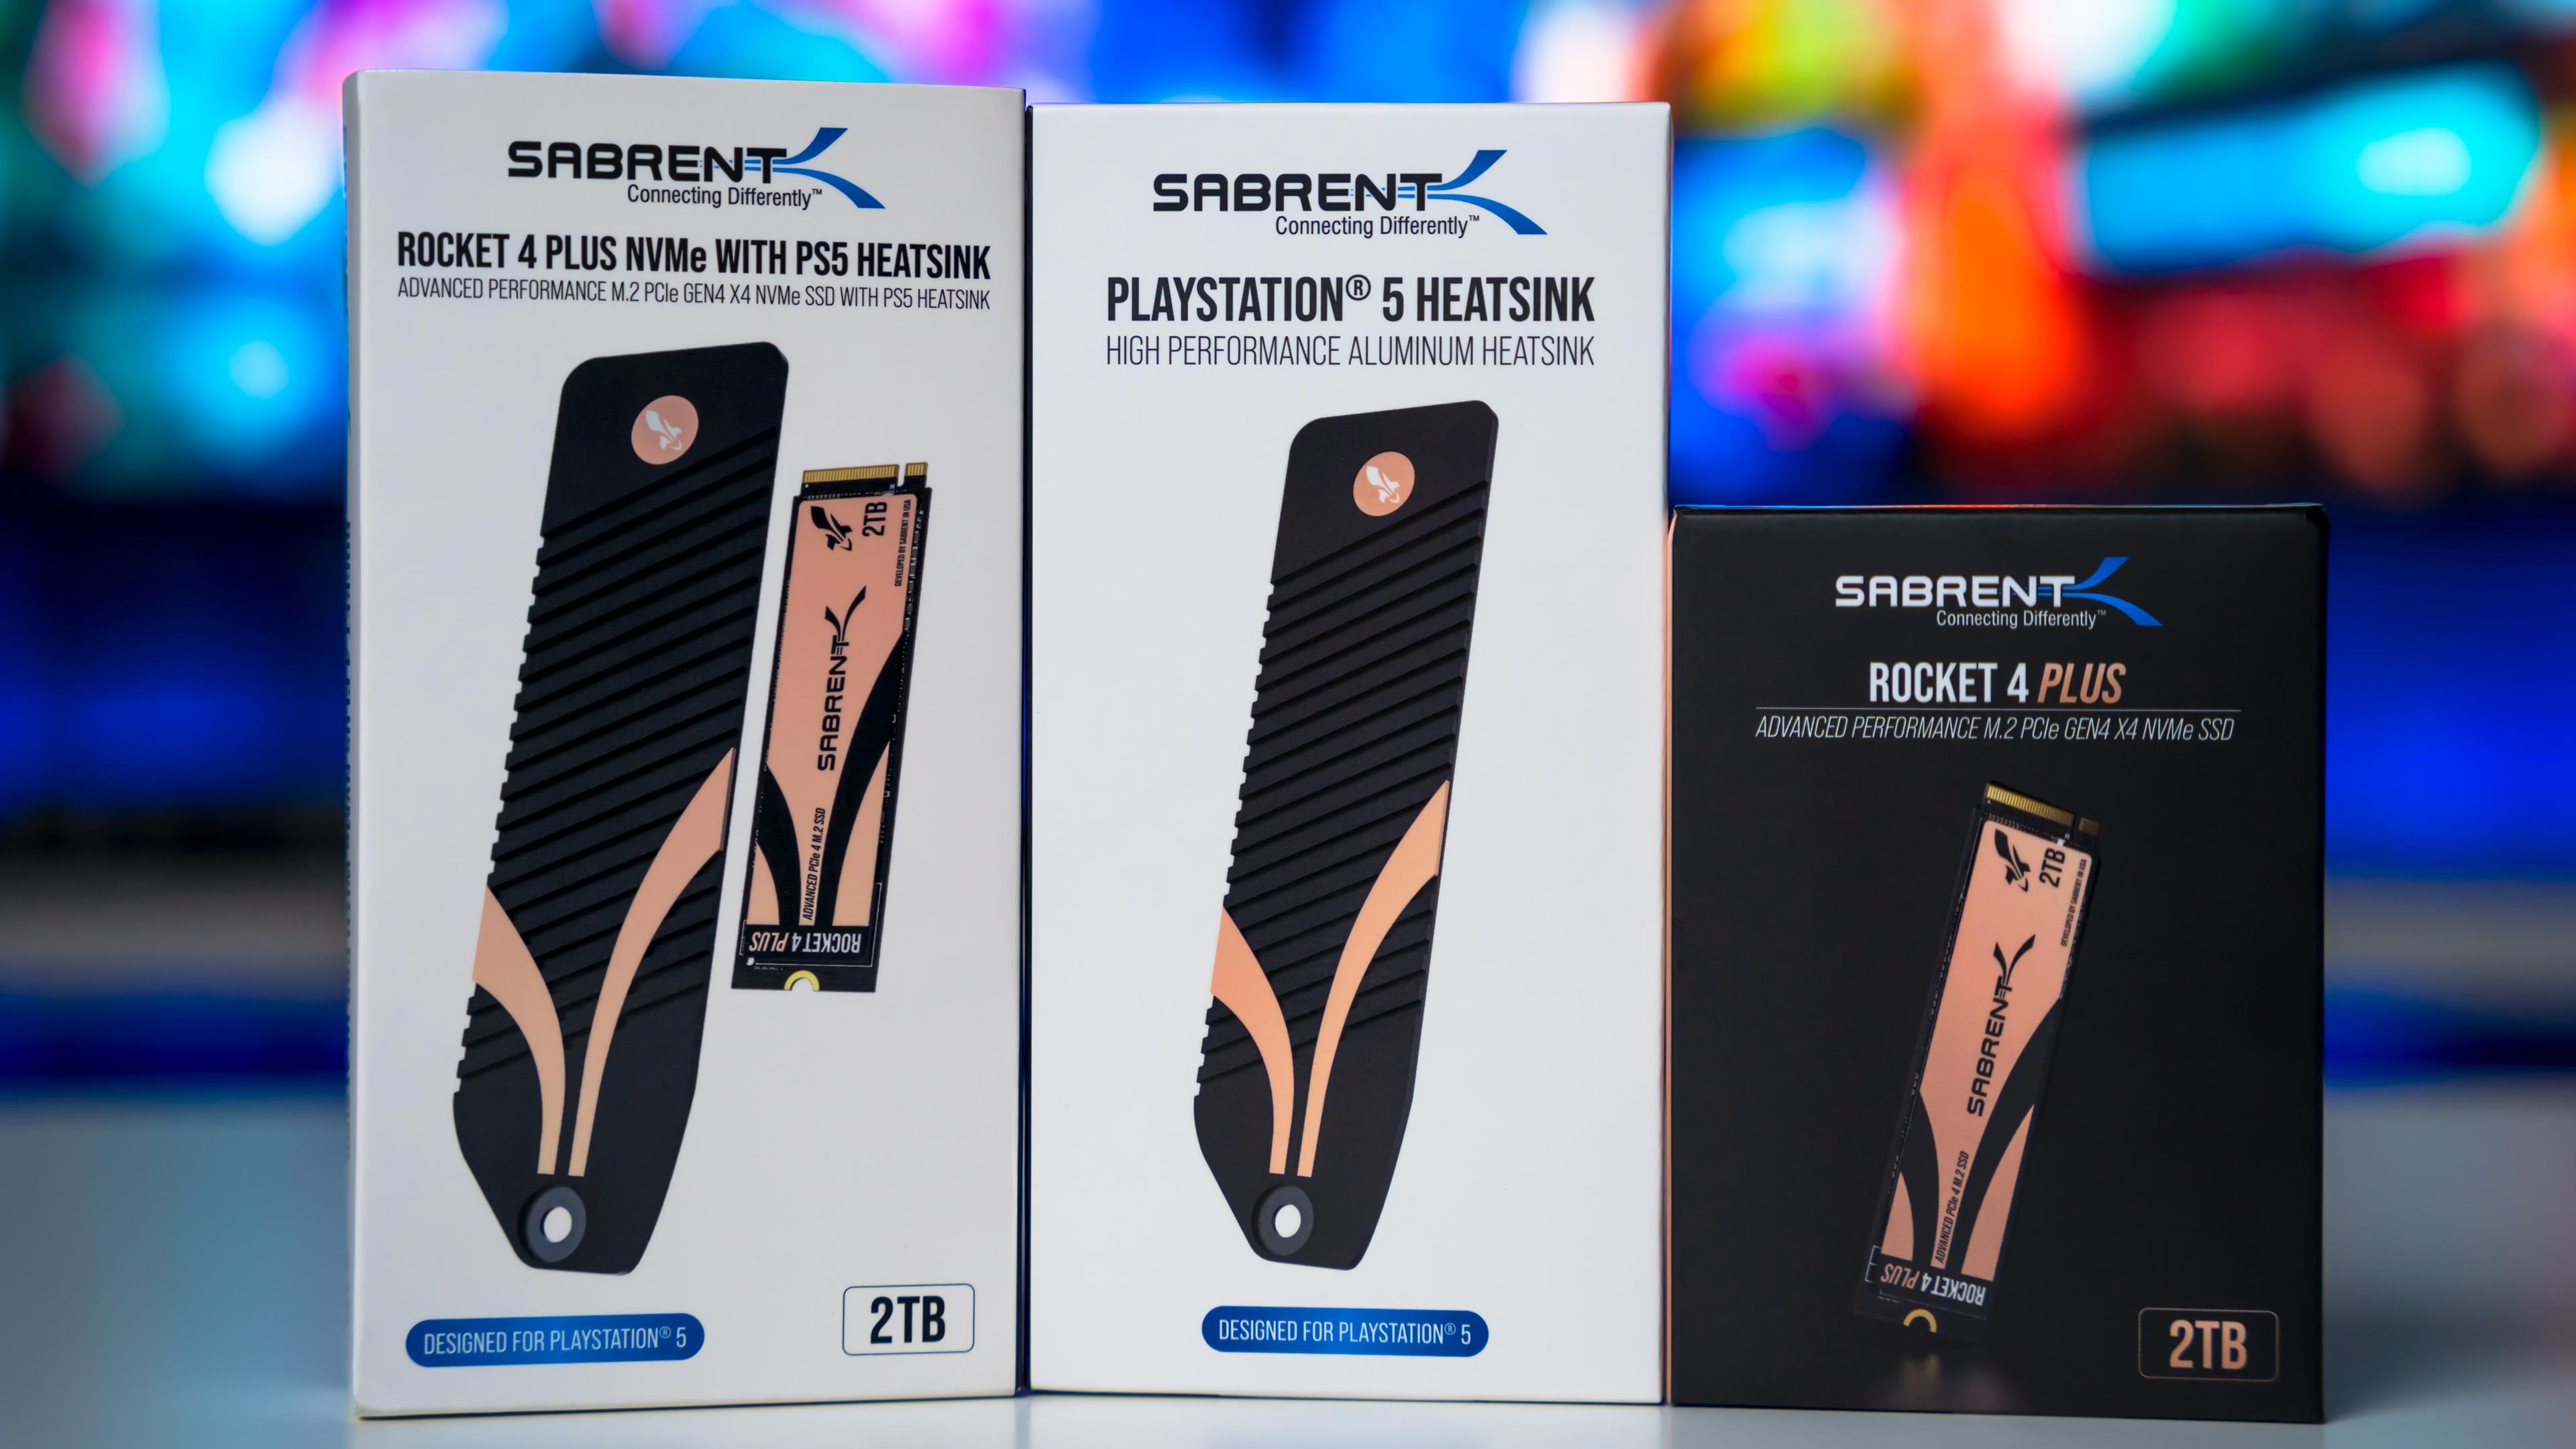 Sabrent Rocket 4 Plus PS5 Heatsink Box (7)